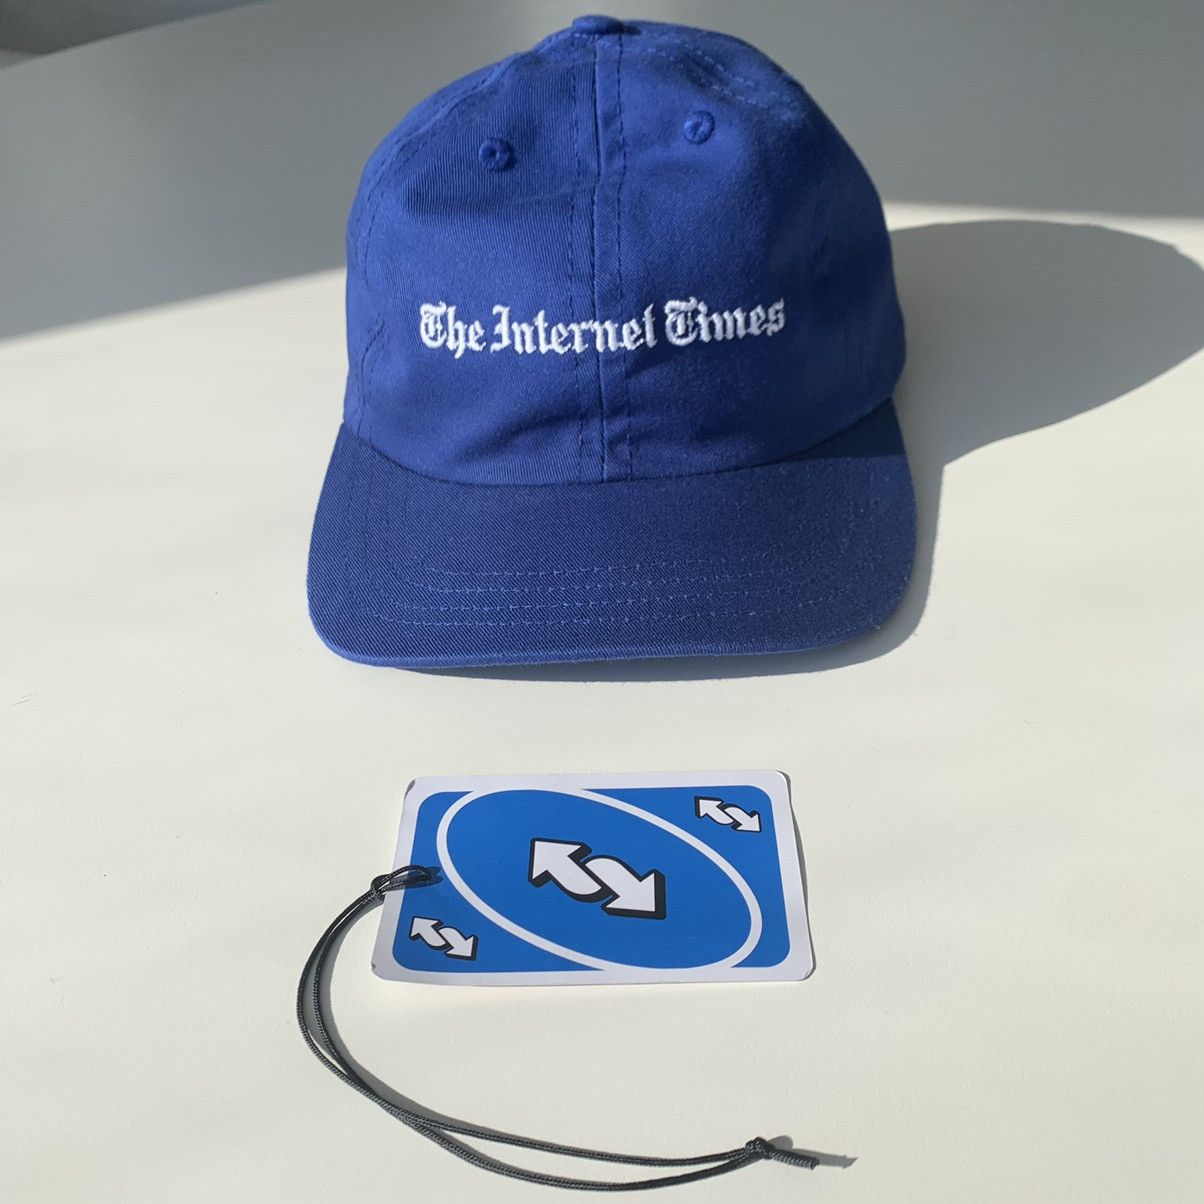 Benjamin Edgar The Internet Times Hat | Grailed